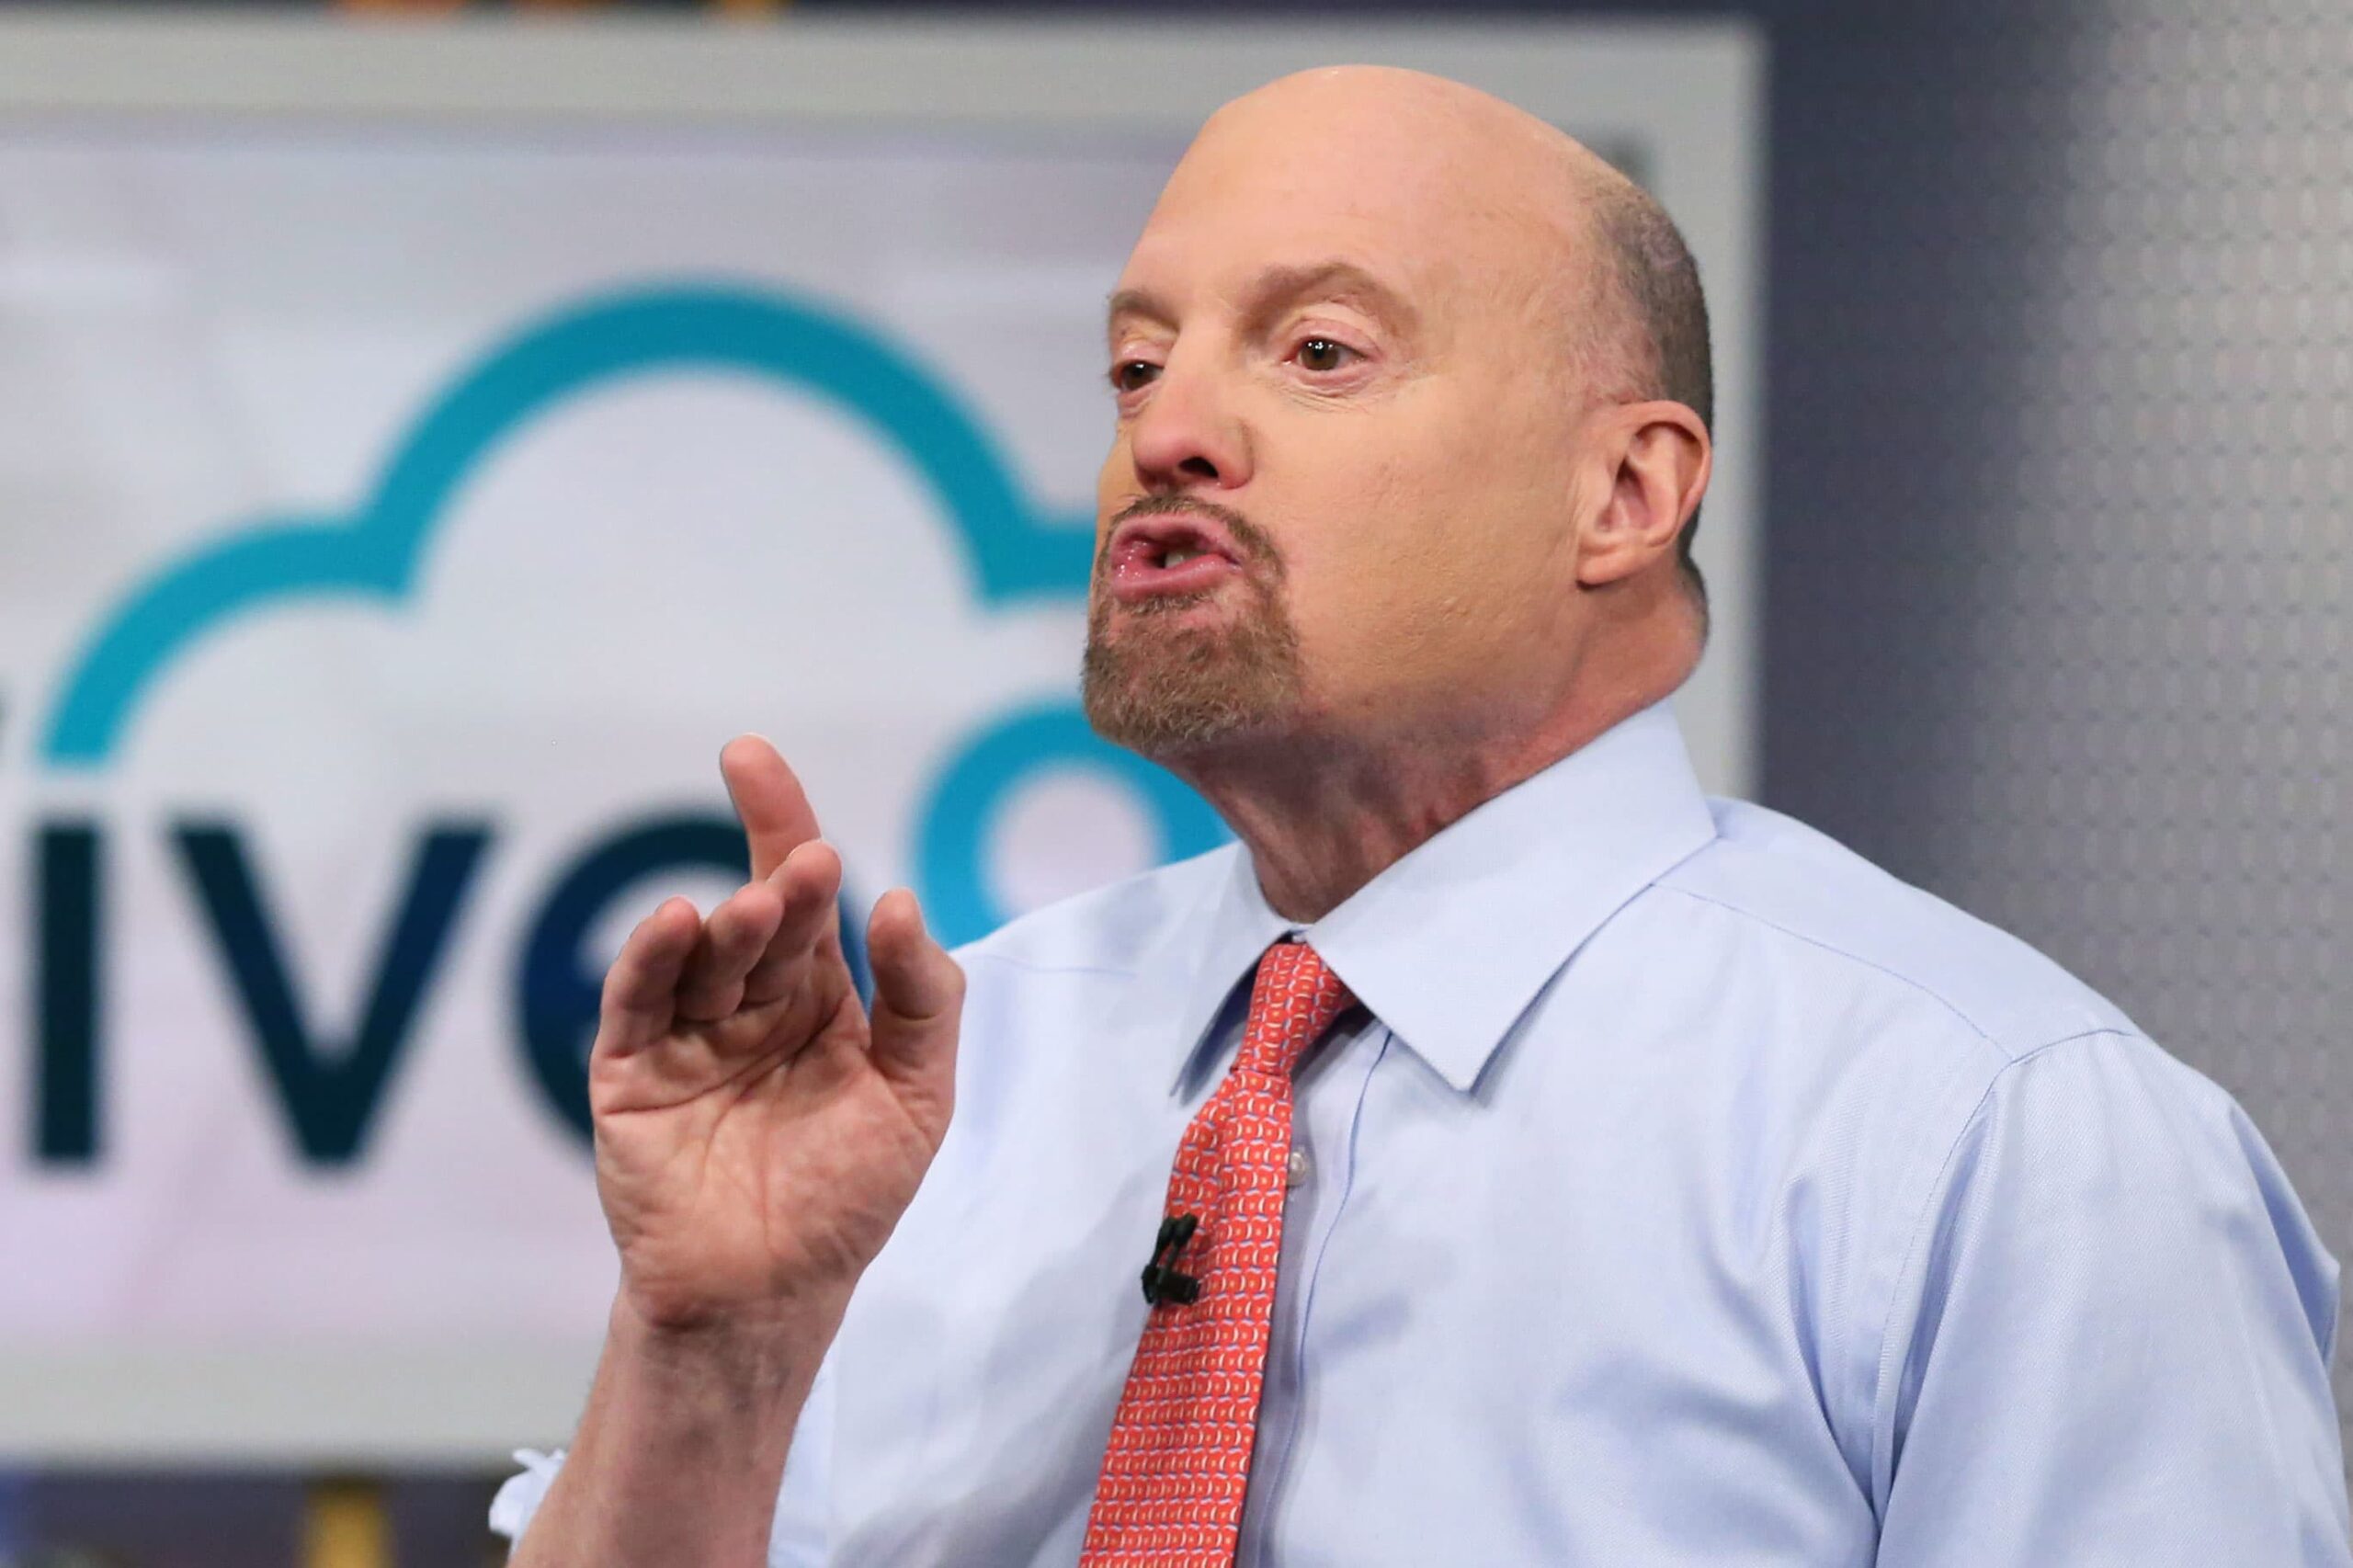 Jim Cramer says not all stocks are struggling to start 2022